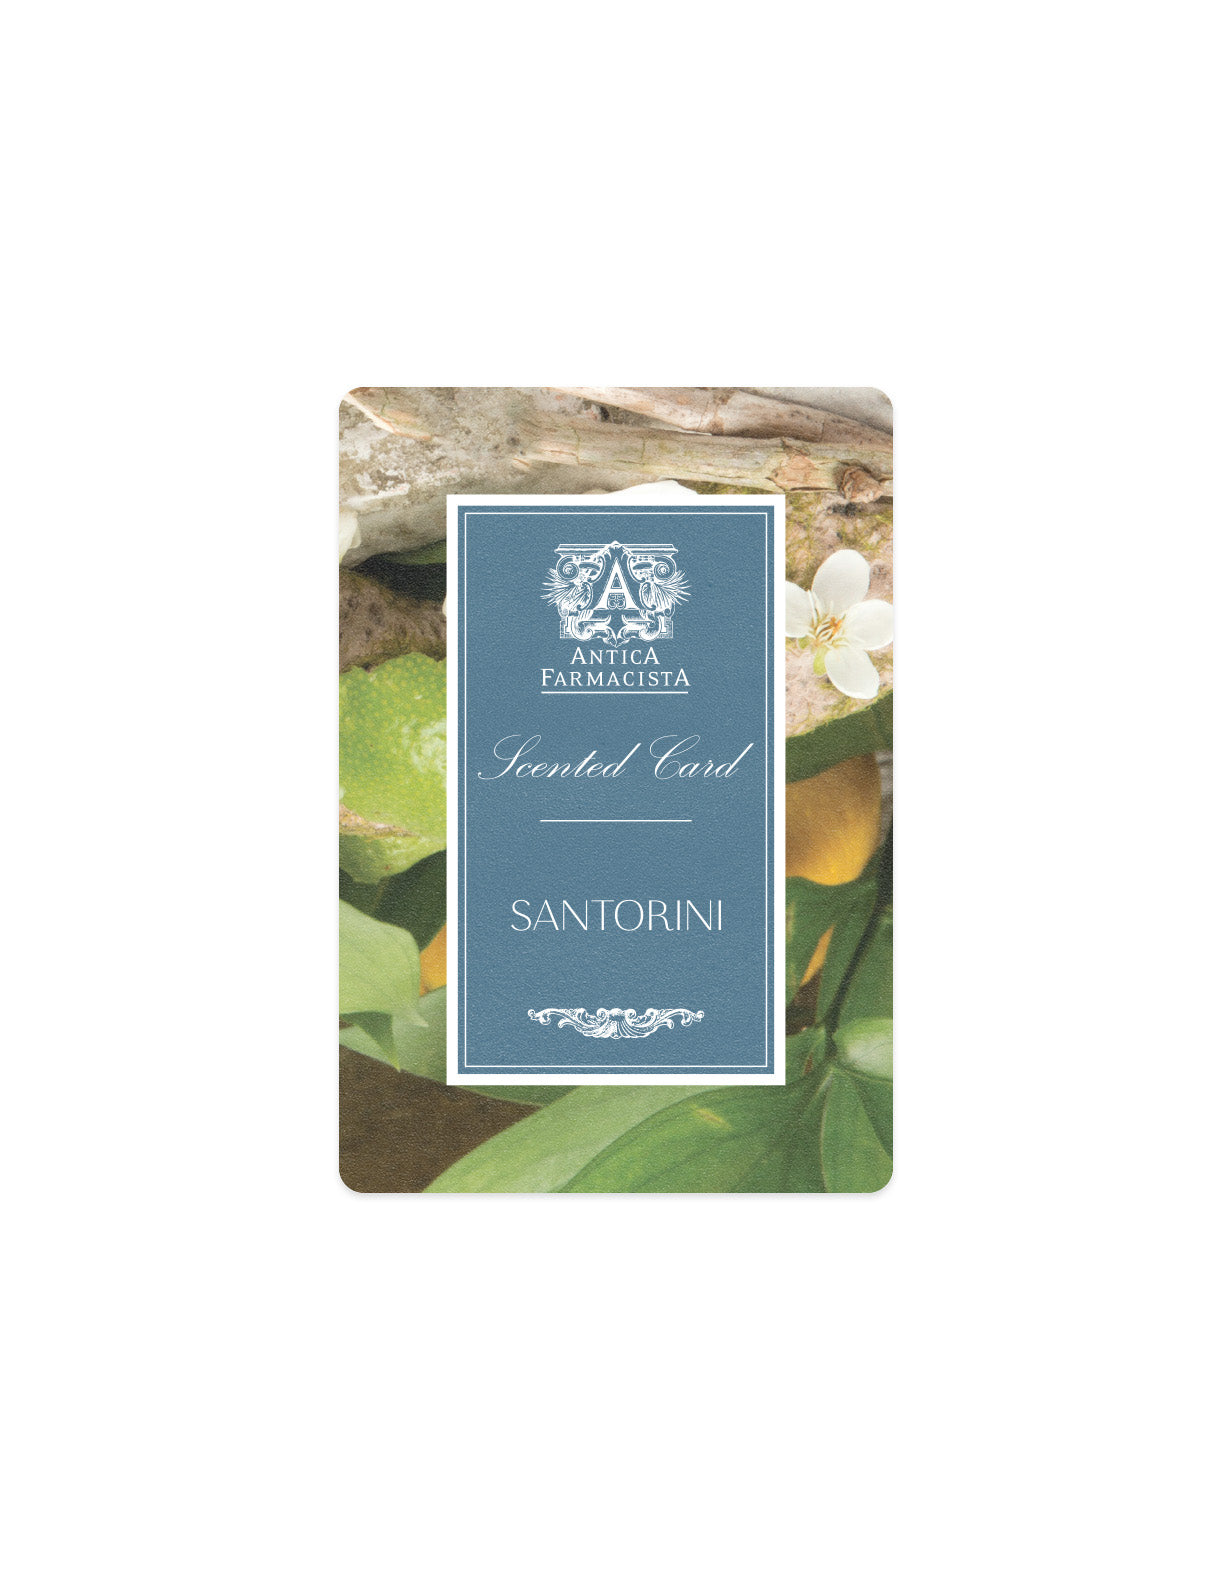 Scented Card - Santorini